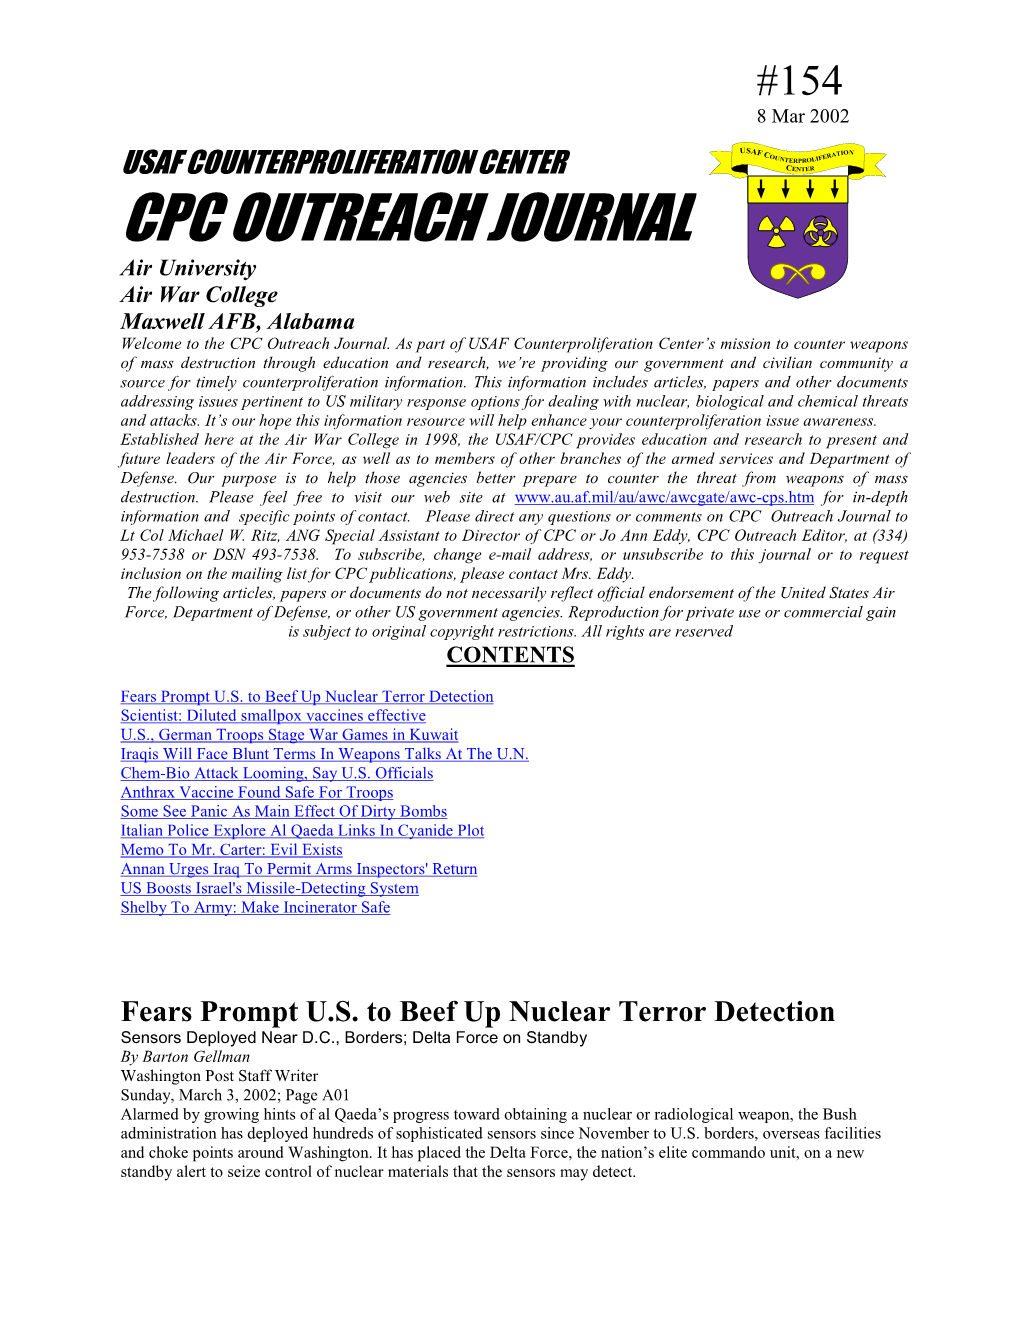 CPC Outreach Journal #154